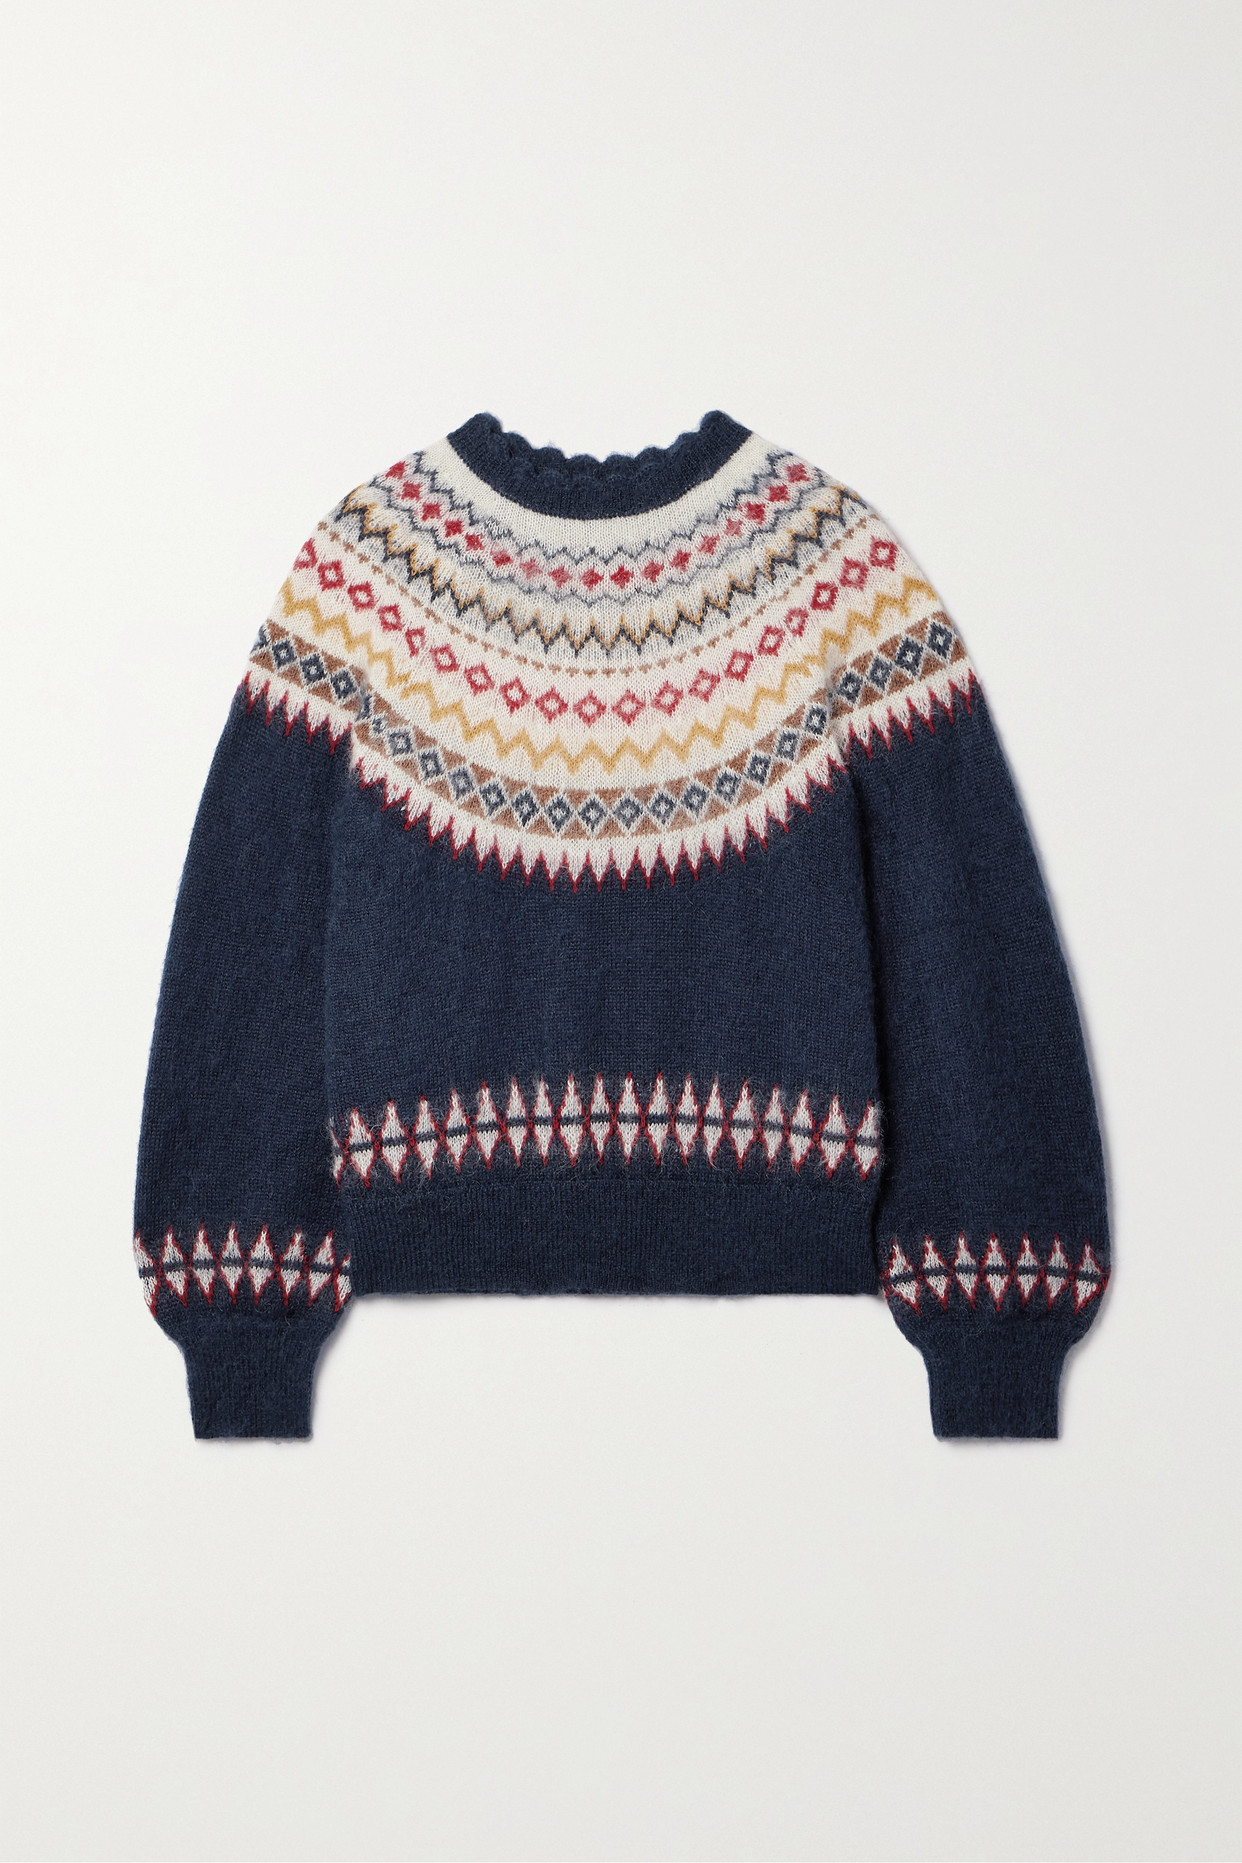 Harvest Fair Isle Knitted Sweater